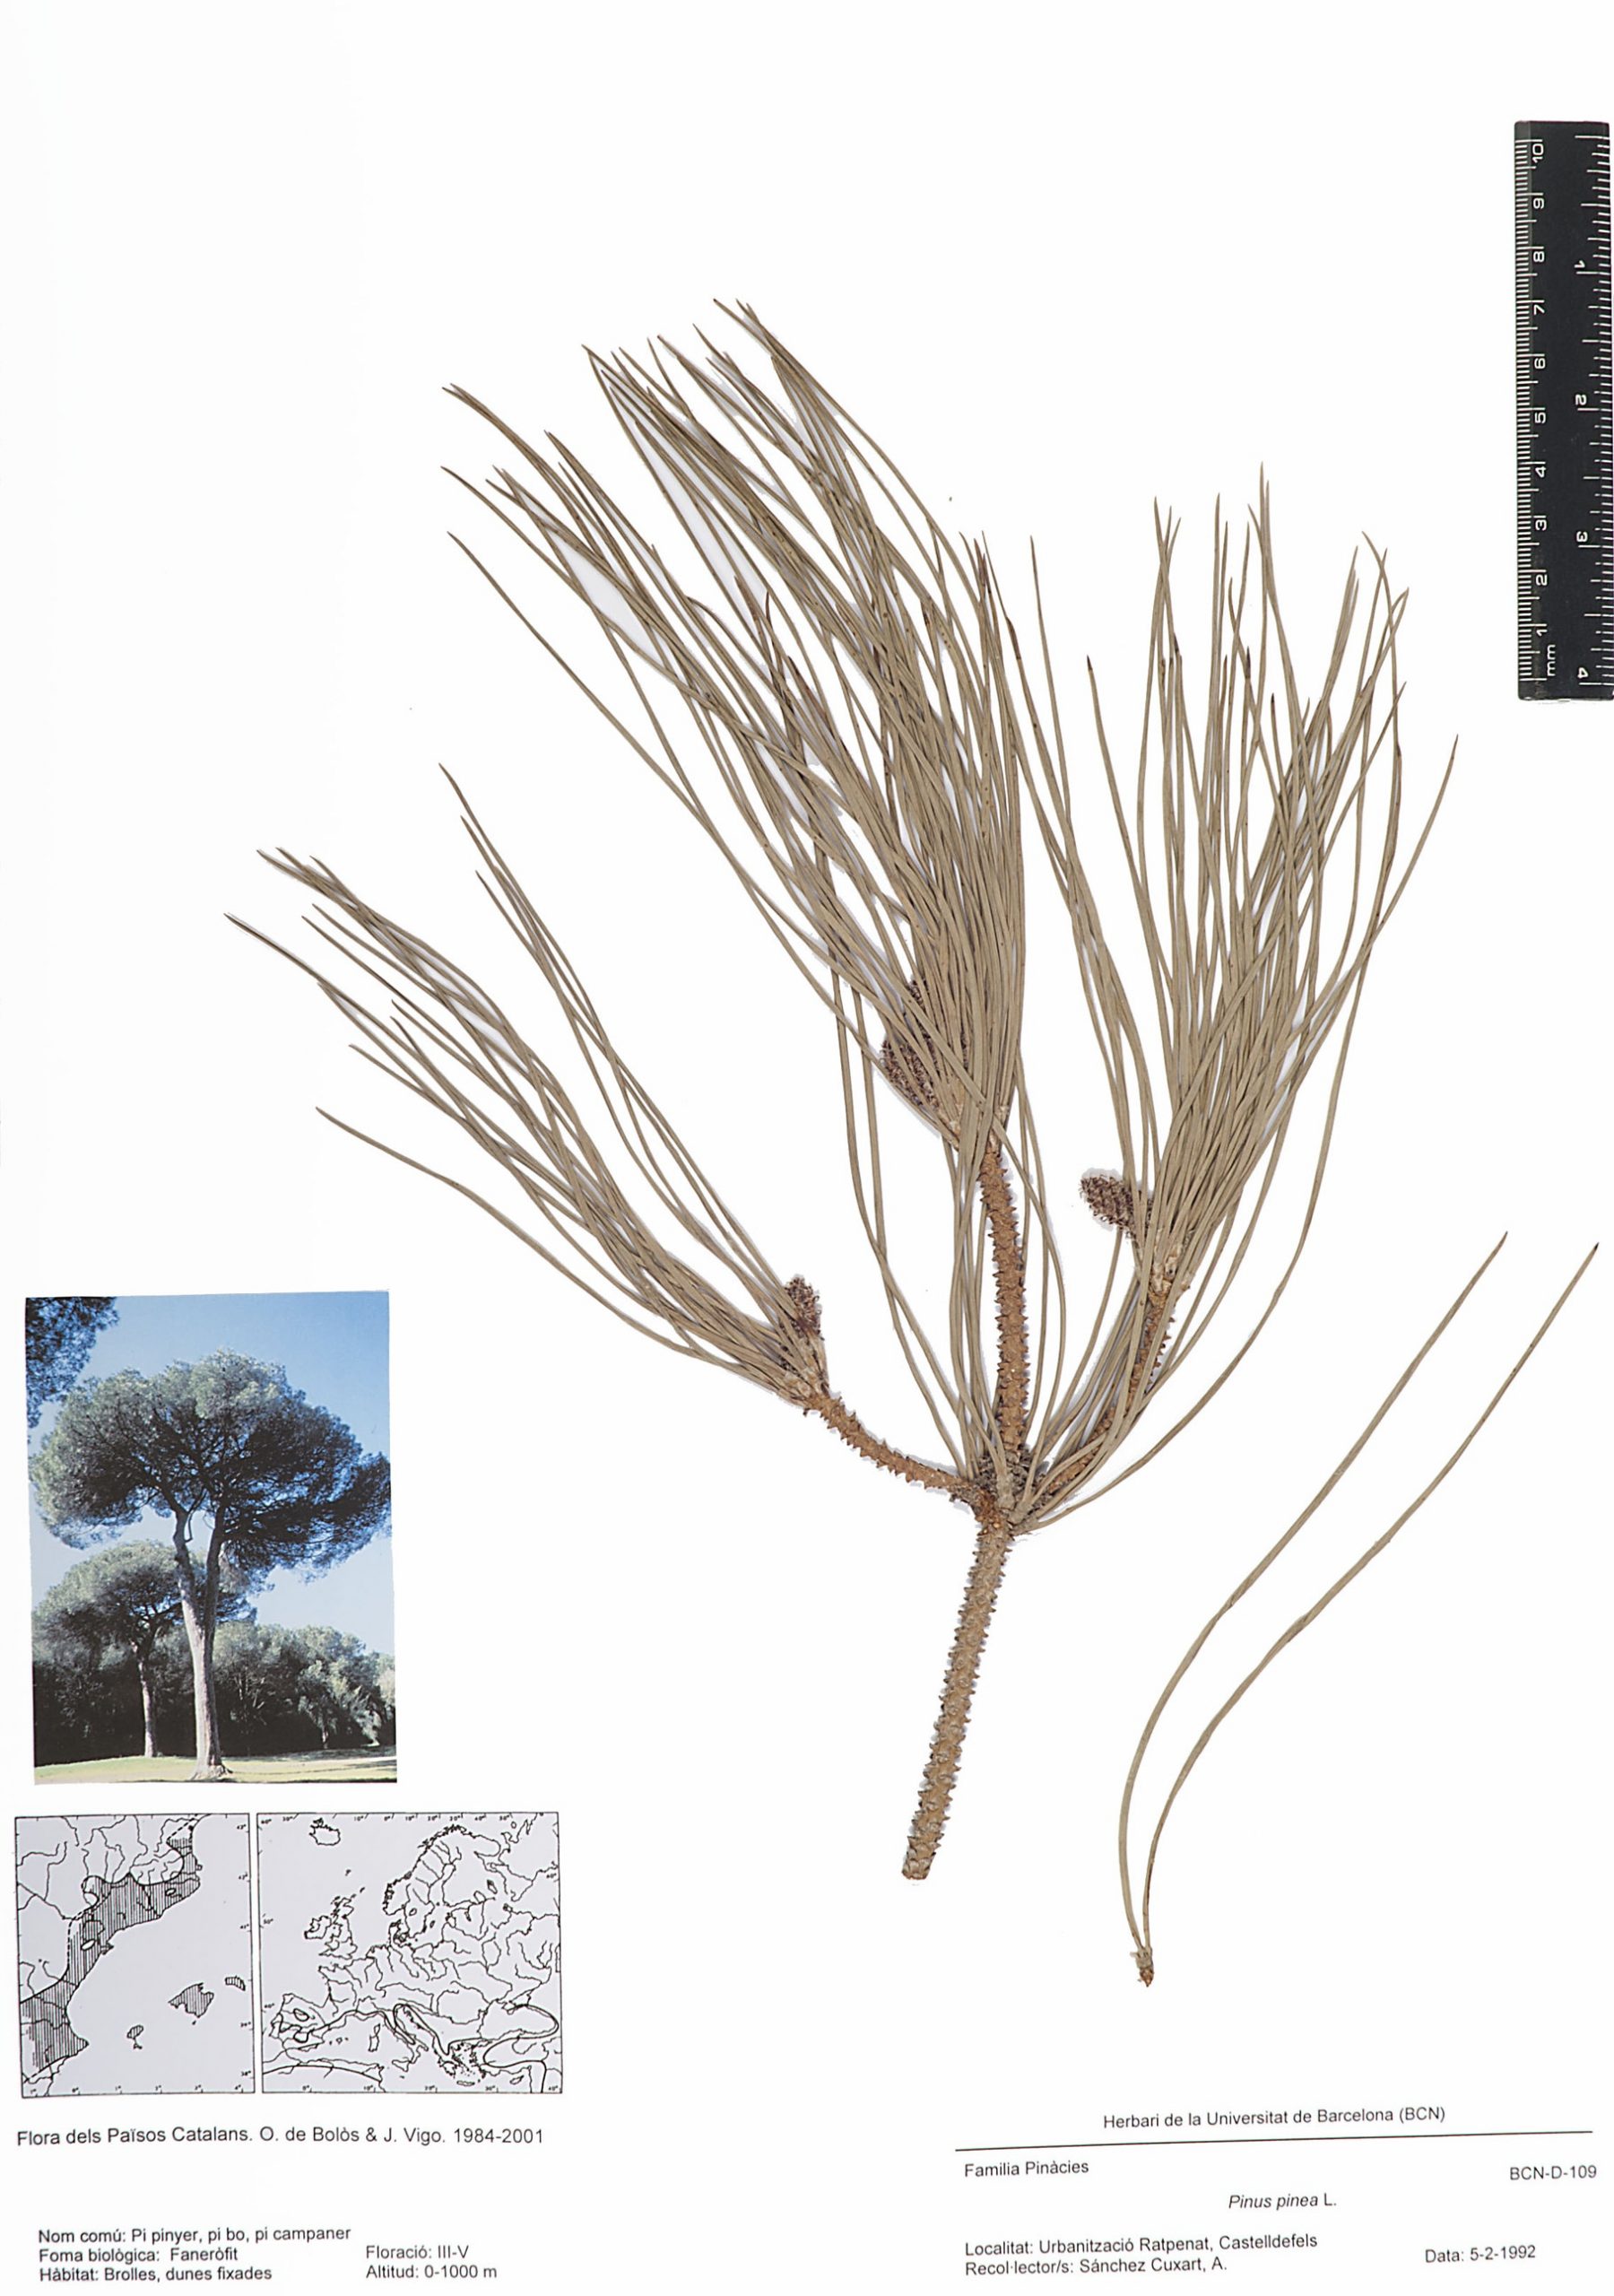 Pinus pinea L. (Pi pinyer, pi bo, pi campaner)